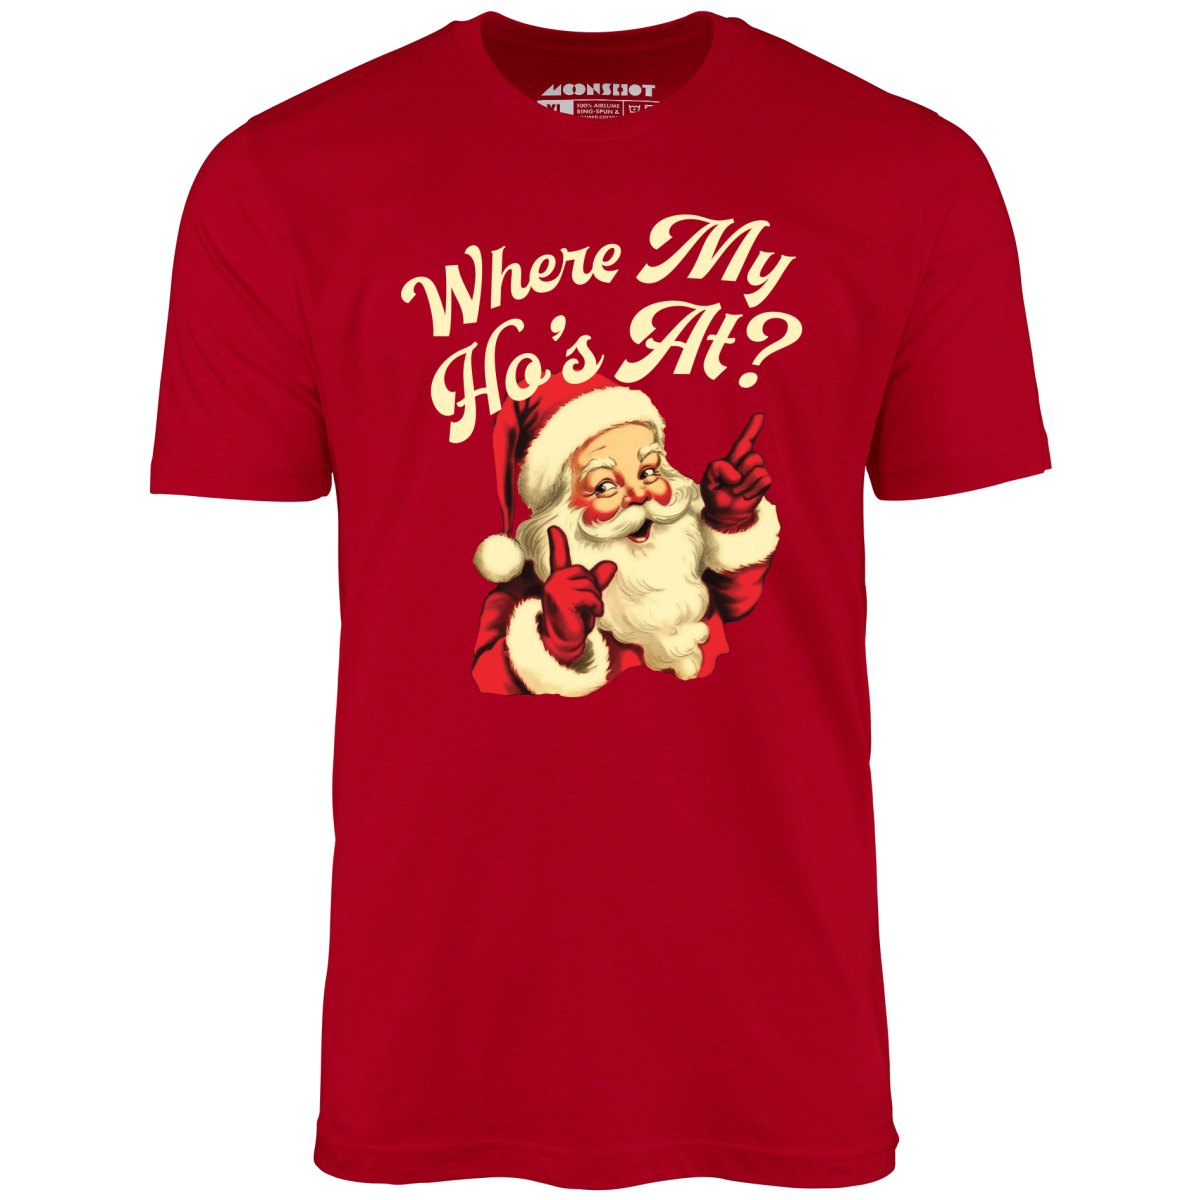 Where My Ho's At? - Unisex T-Shirt